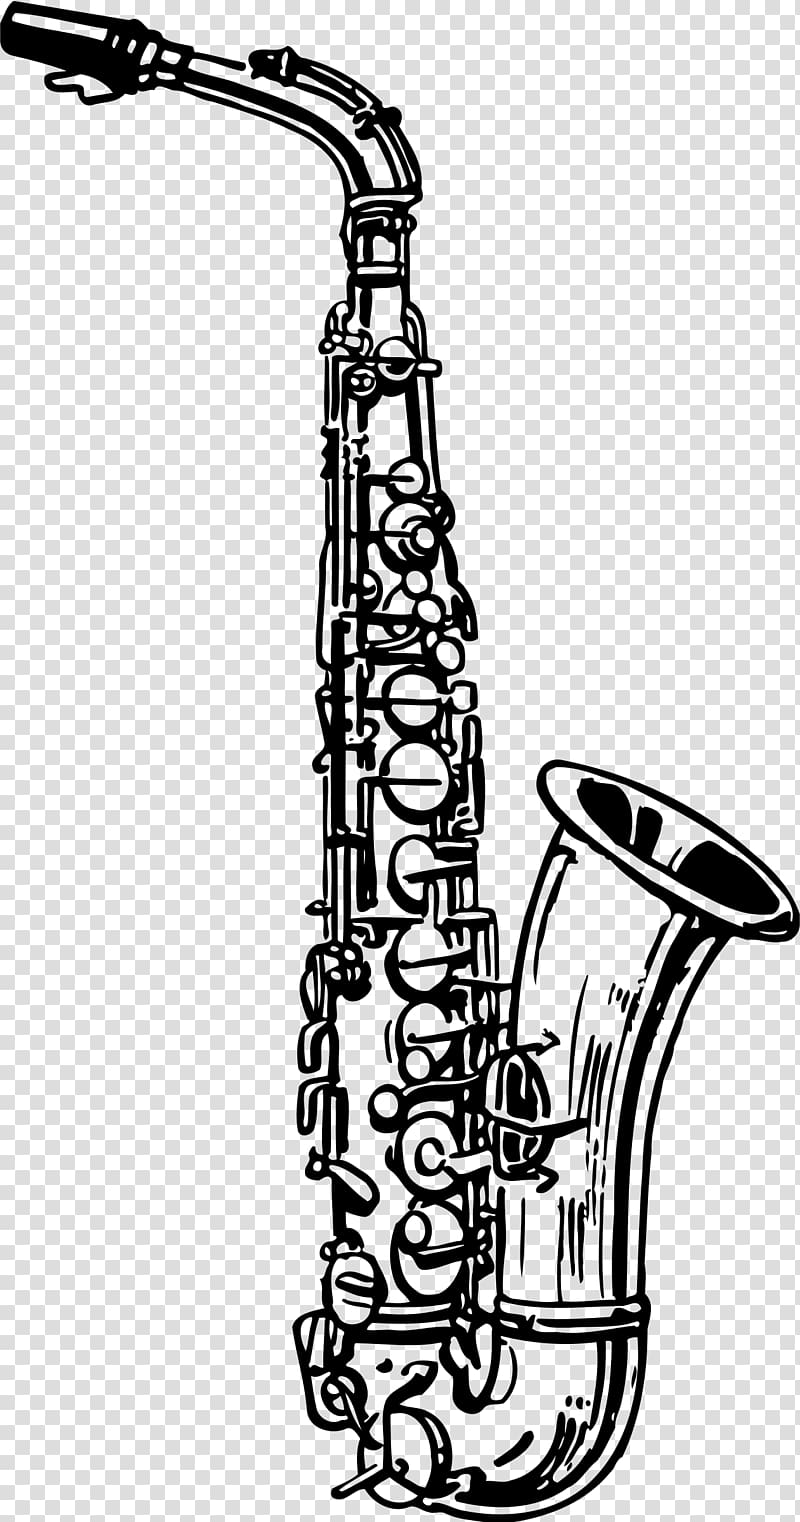 Tenor saxophone Drawing Alto saxophone, saxophon transparent